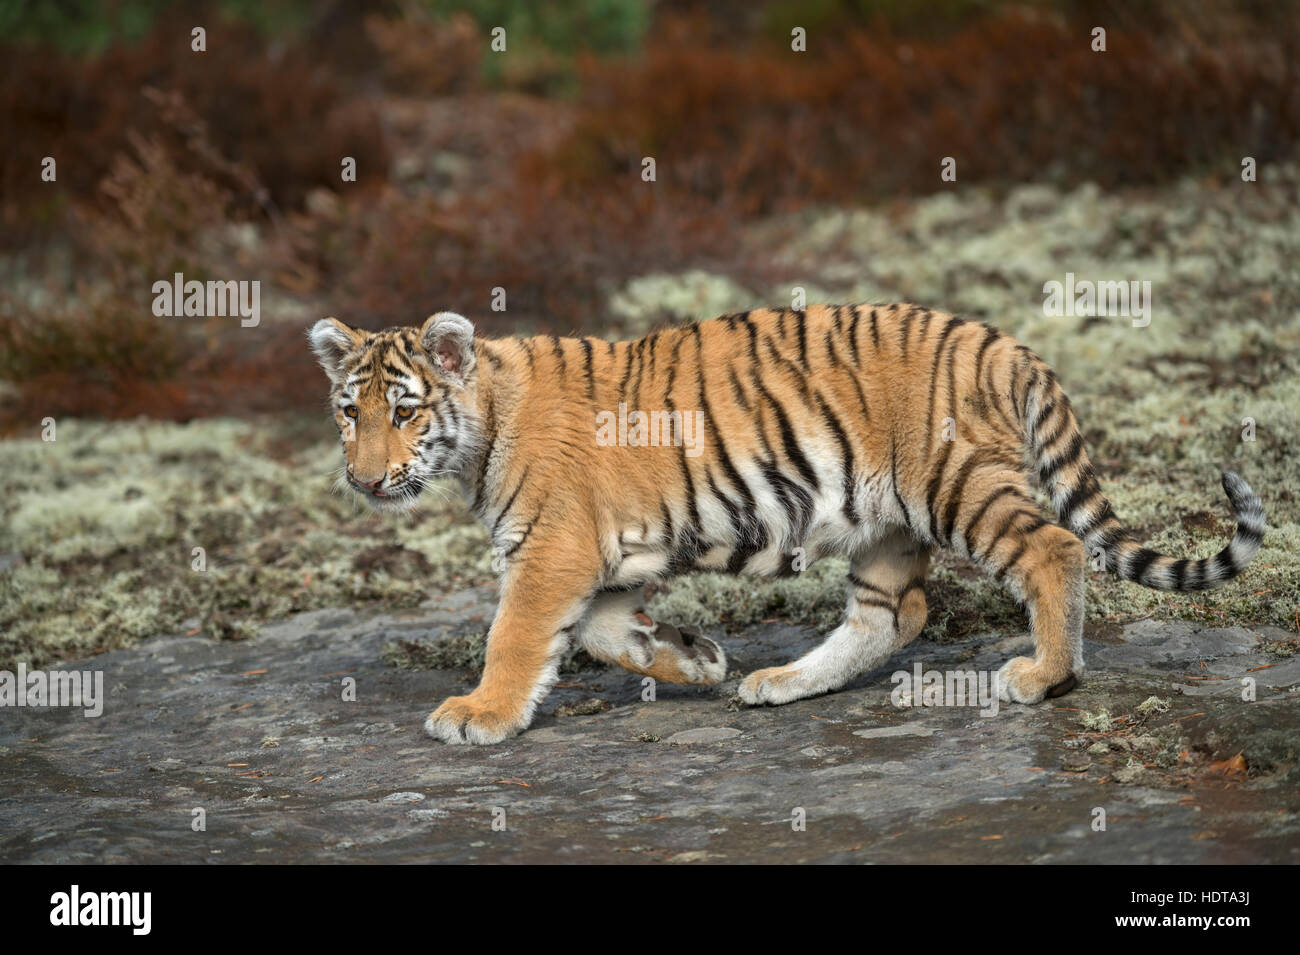 Royal Bengal Tiger / Koenigstiger ( Panthera tigris ), walking over rocks, watching attentively, full body side view, young animal, soft light. Stock Photo